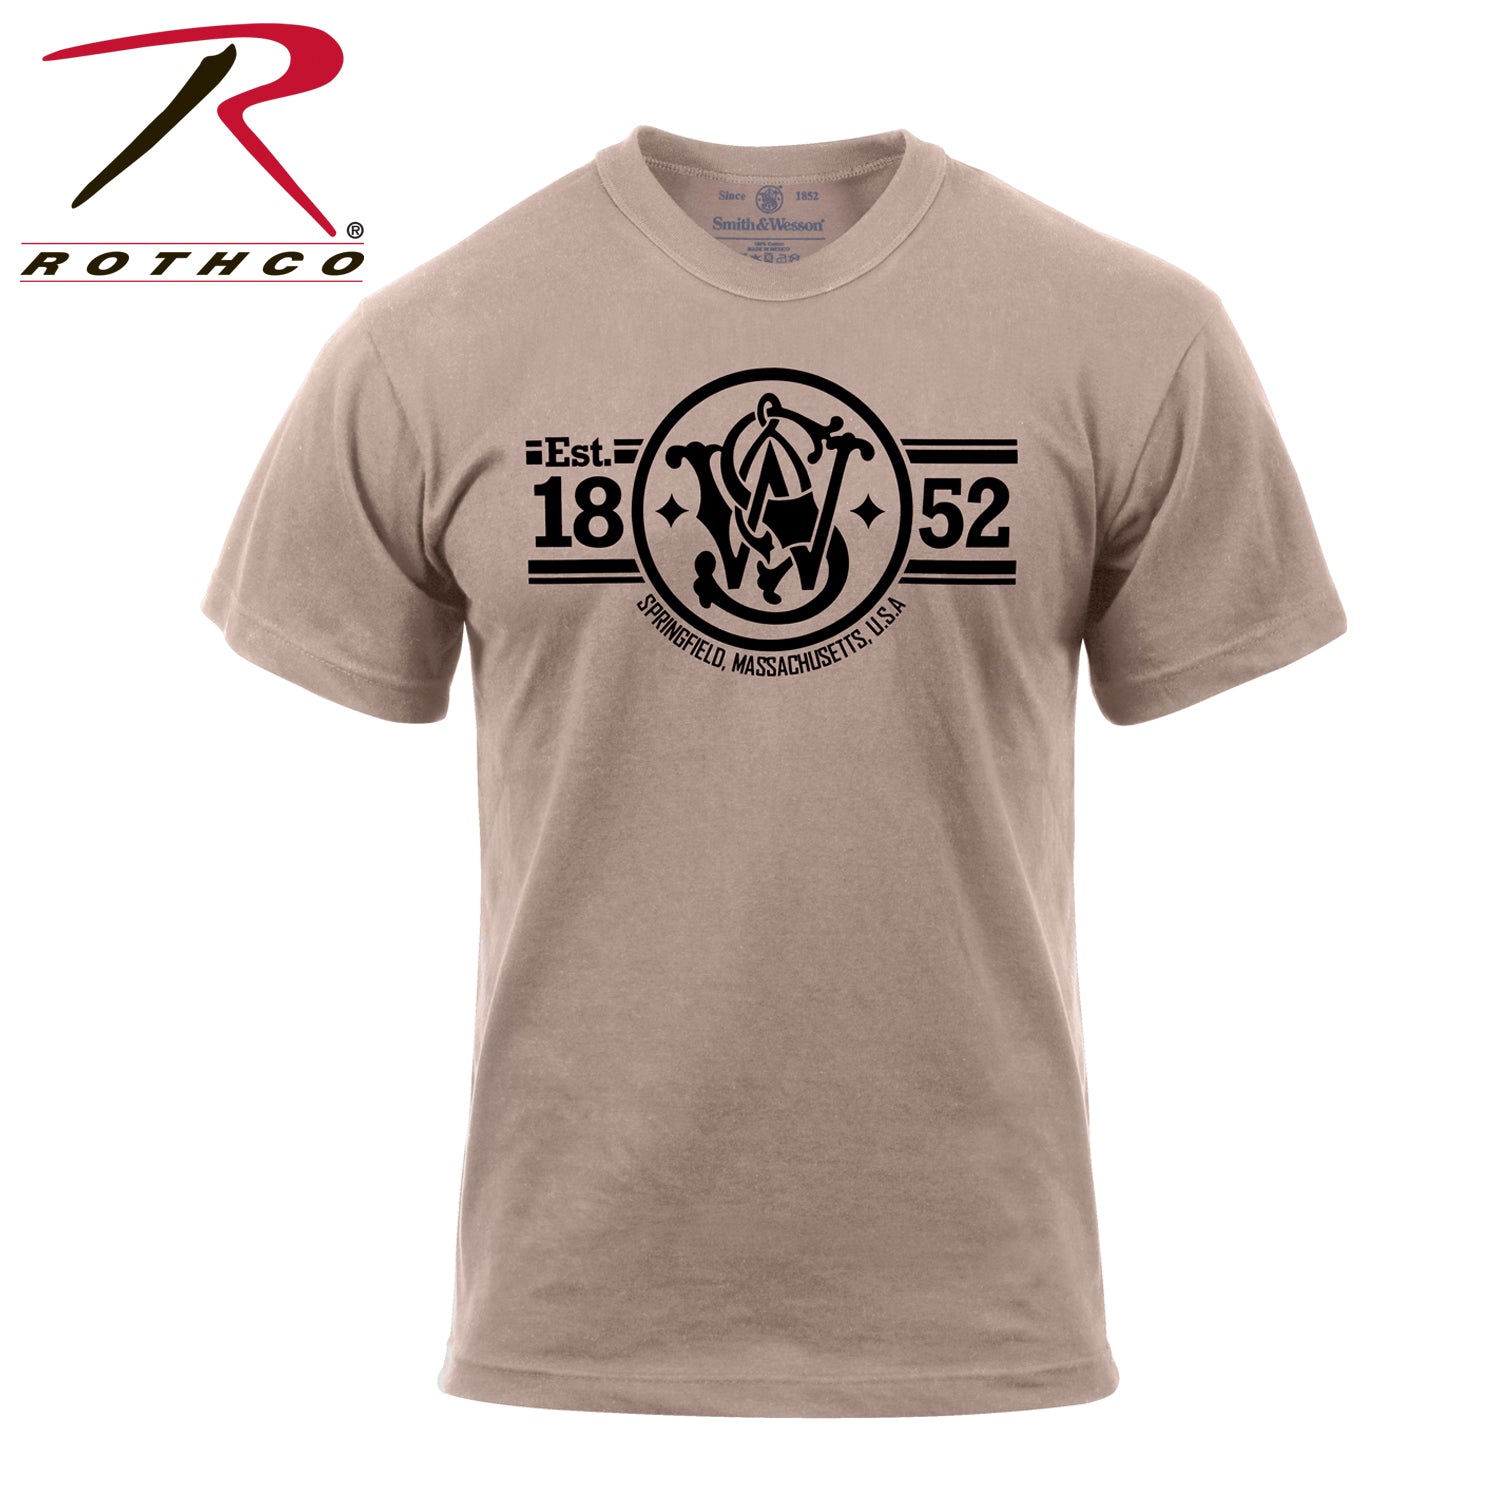 Smith & Wesson Established 1852 T-Shirt